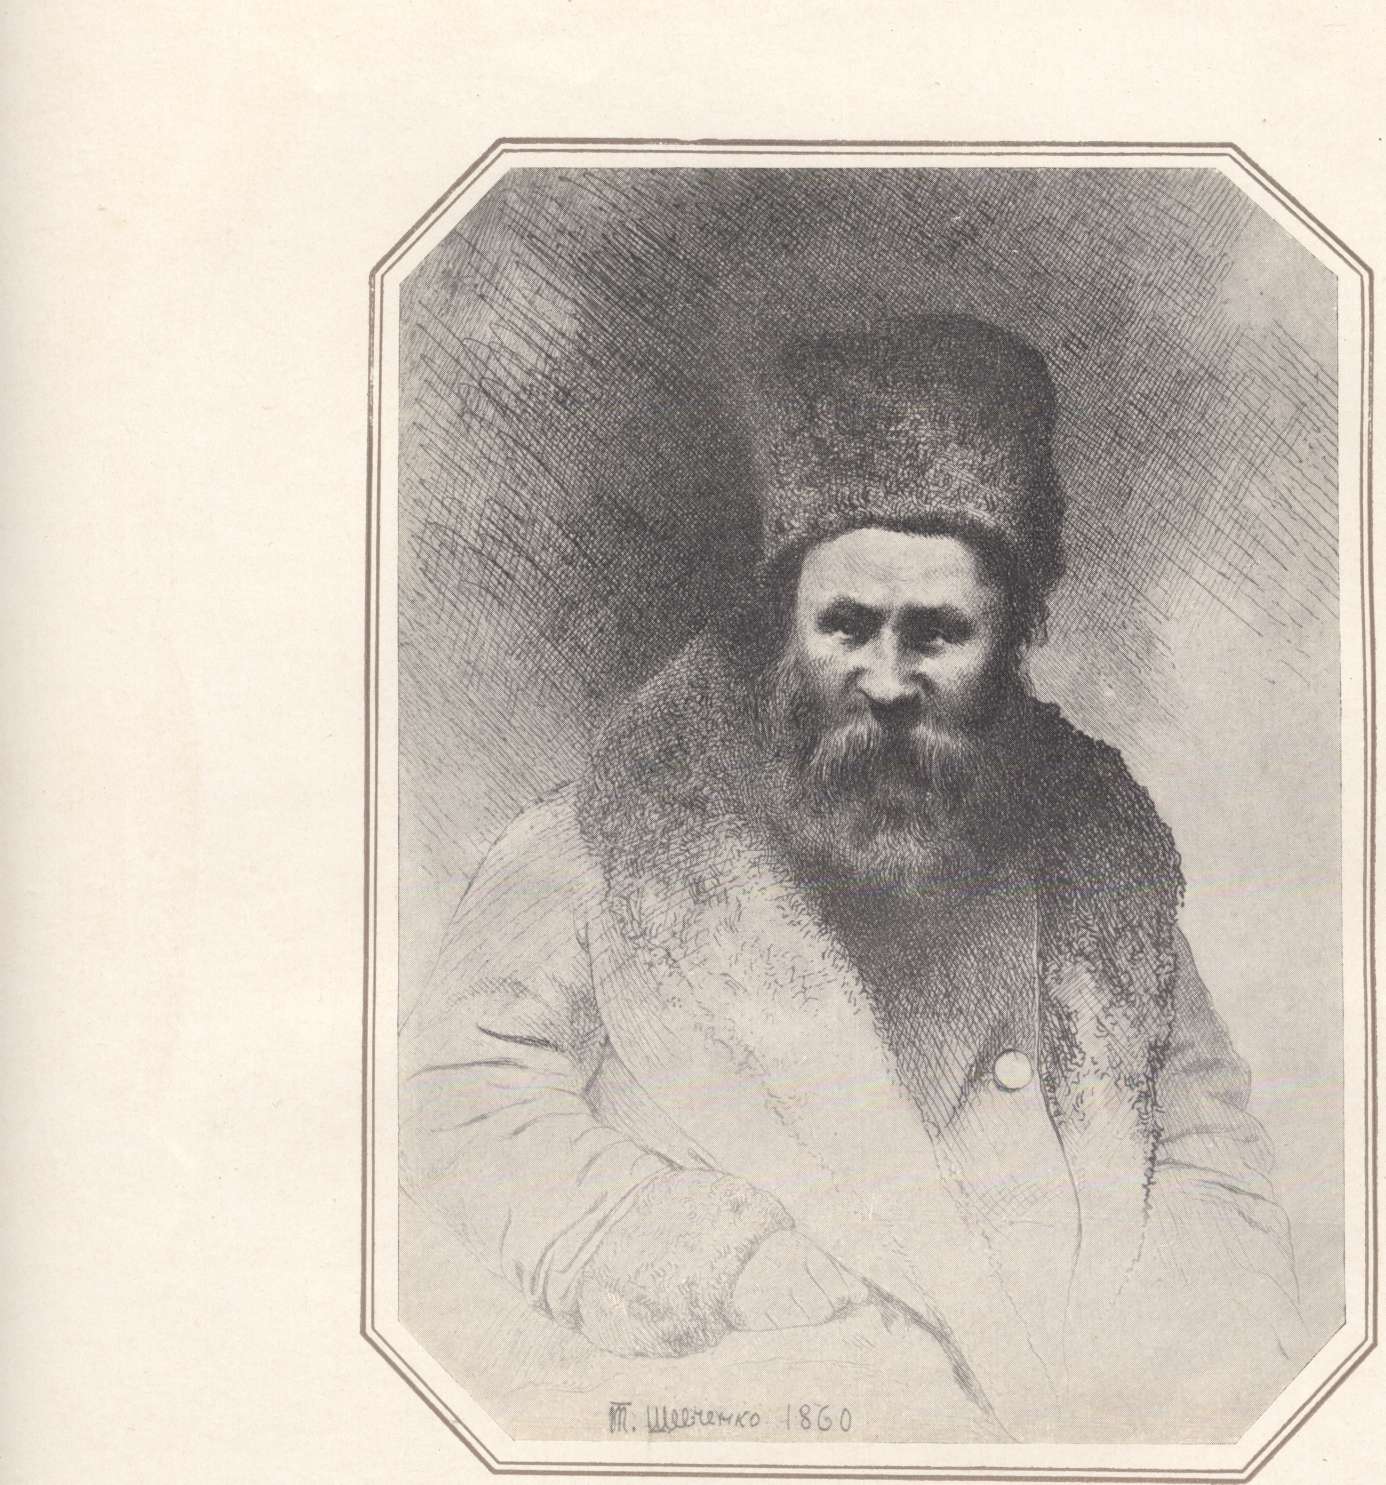 Шевченко Тарас Григорьевич (1814-1861)